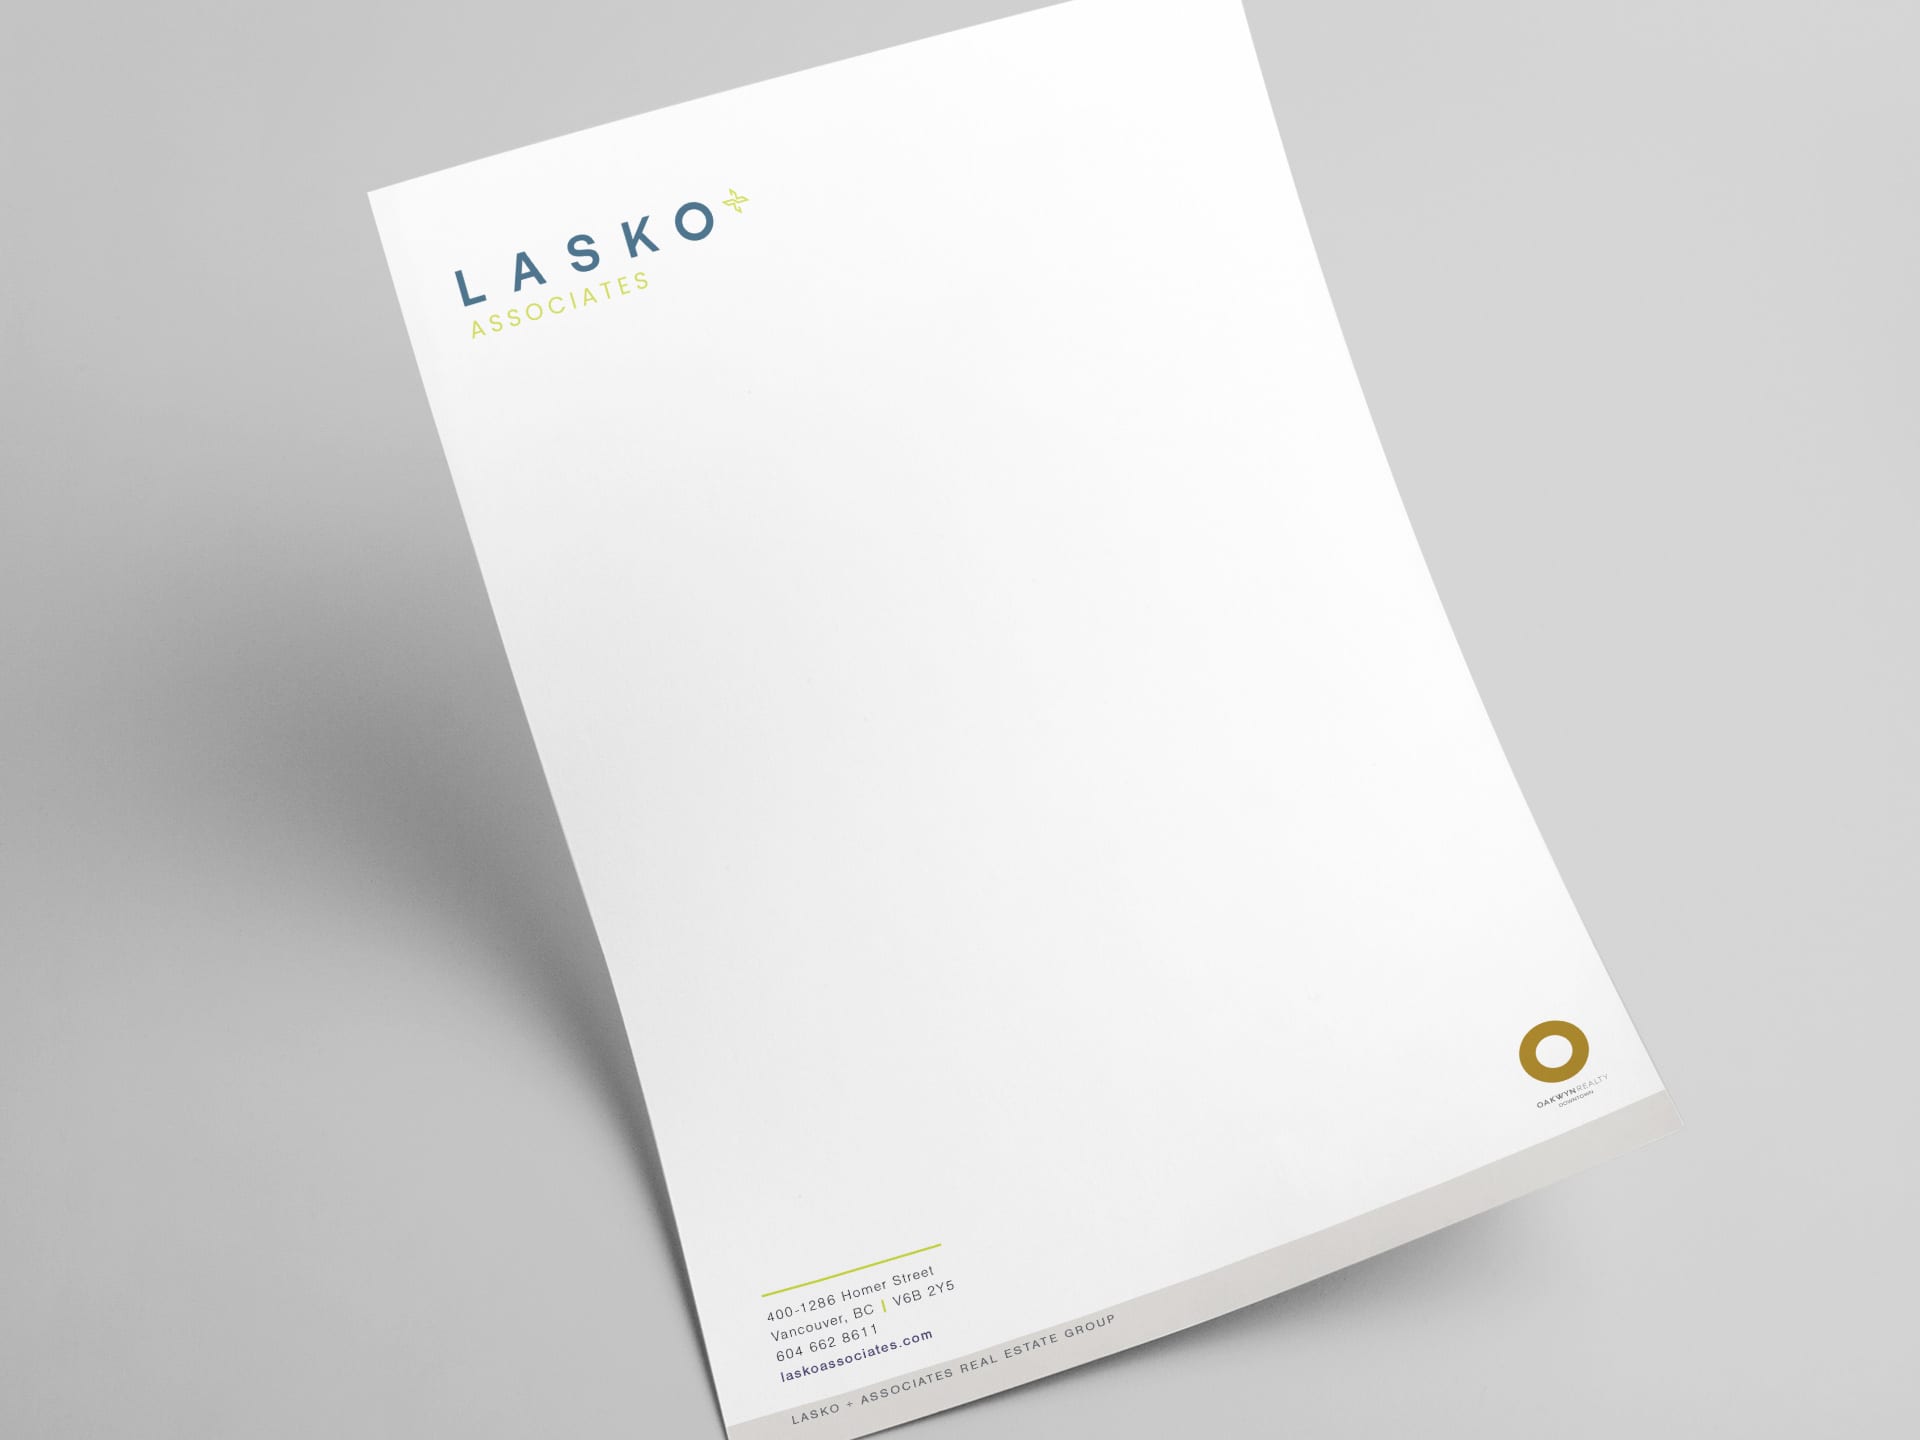 Y5 Creative Case Studies 2019 Letterhead Lasko And Associates Real Estate Group